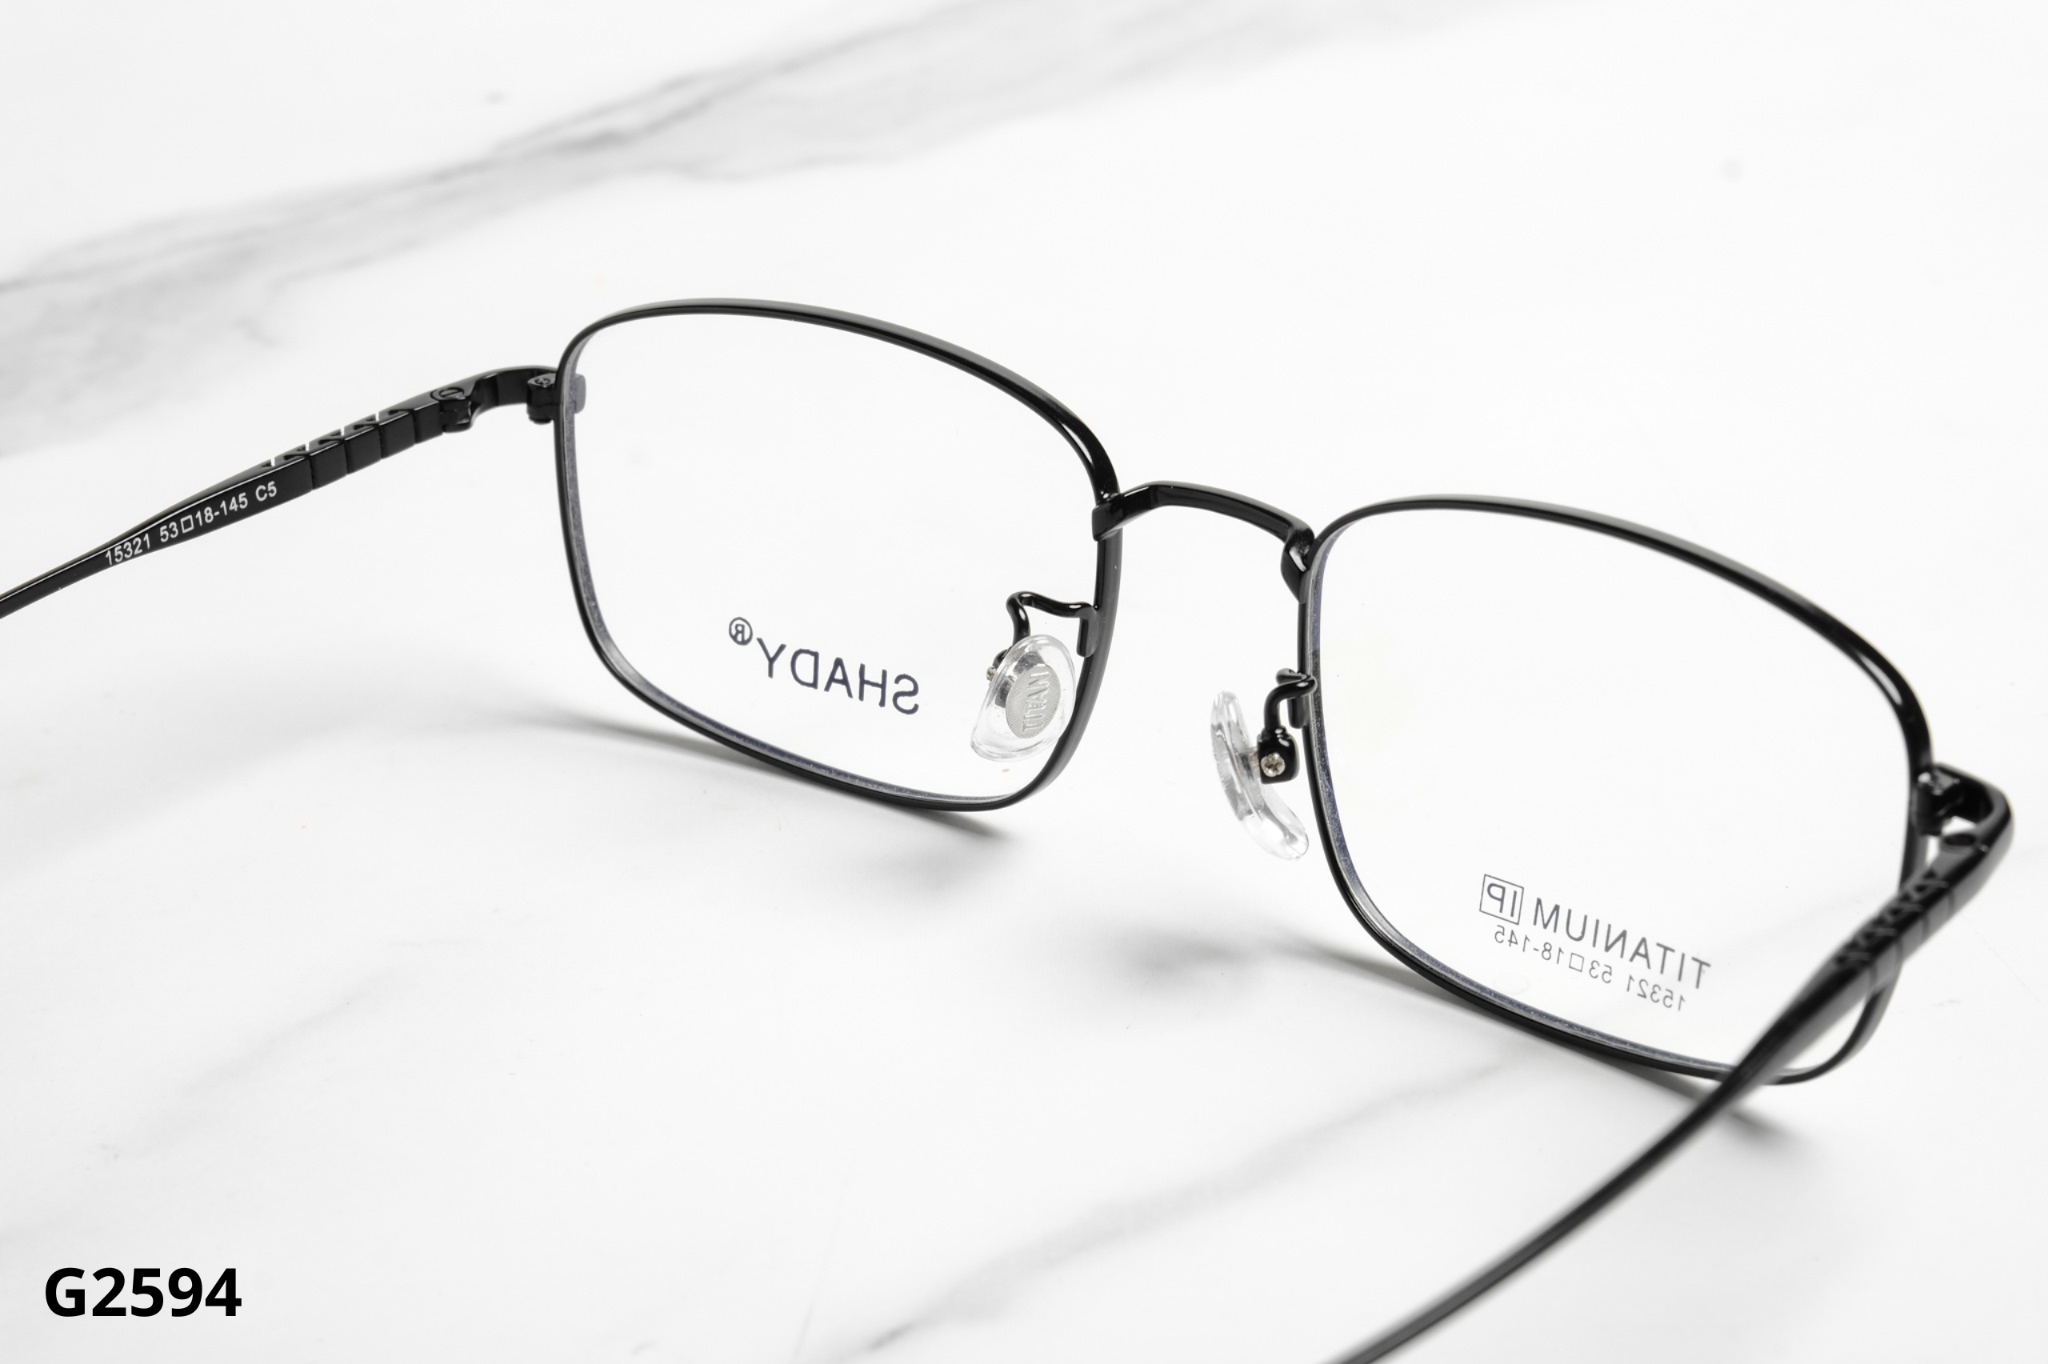  SHADY Eyewear - Glasses - G2594 